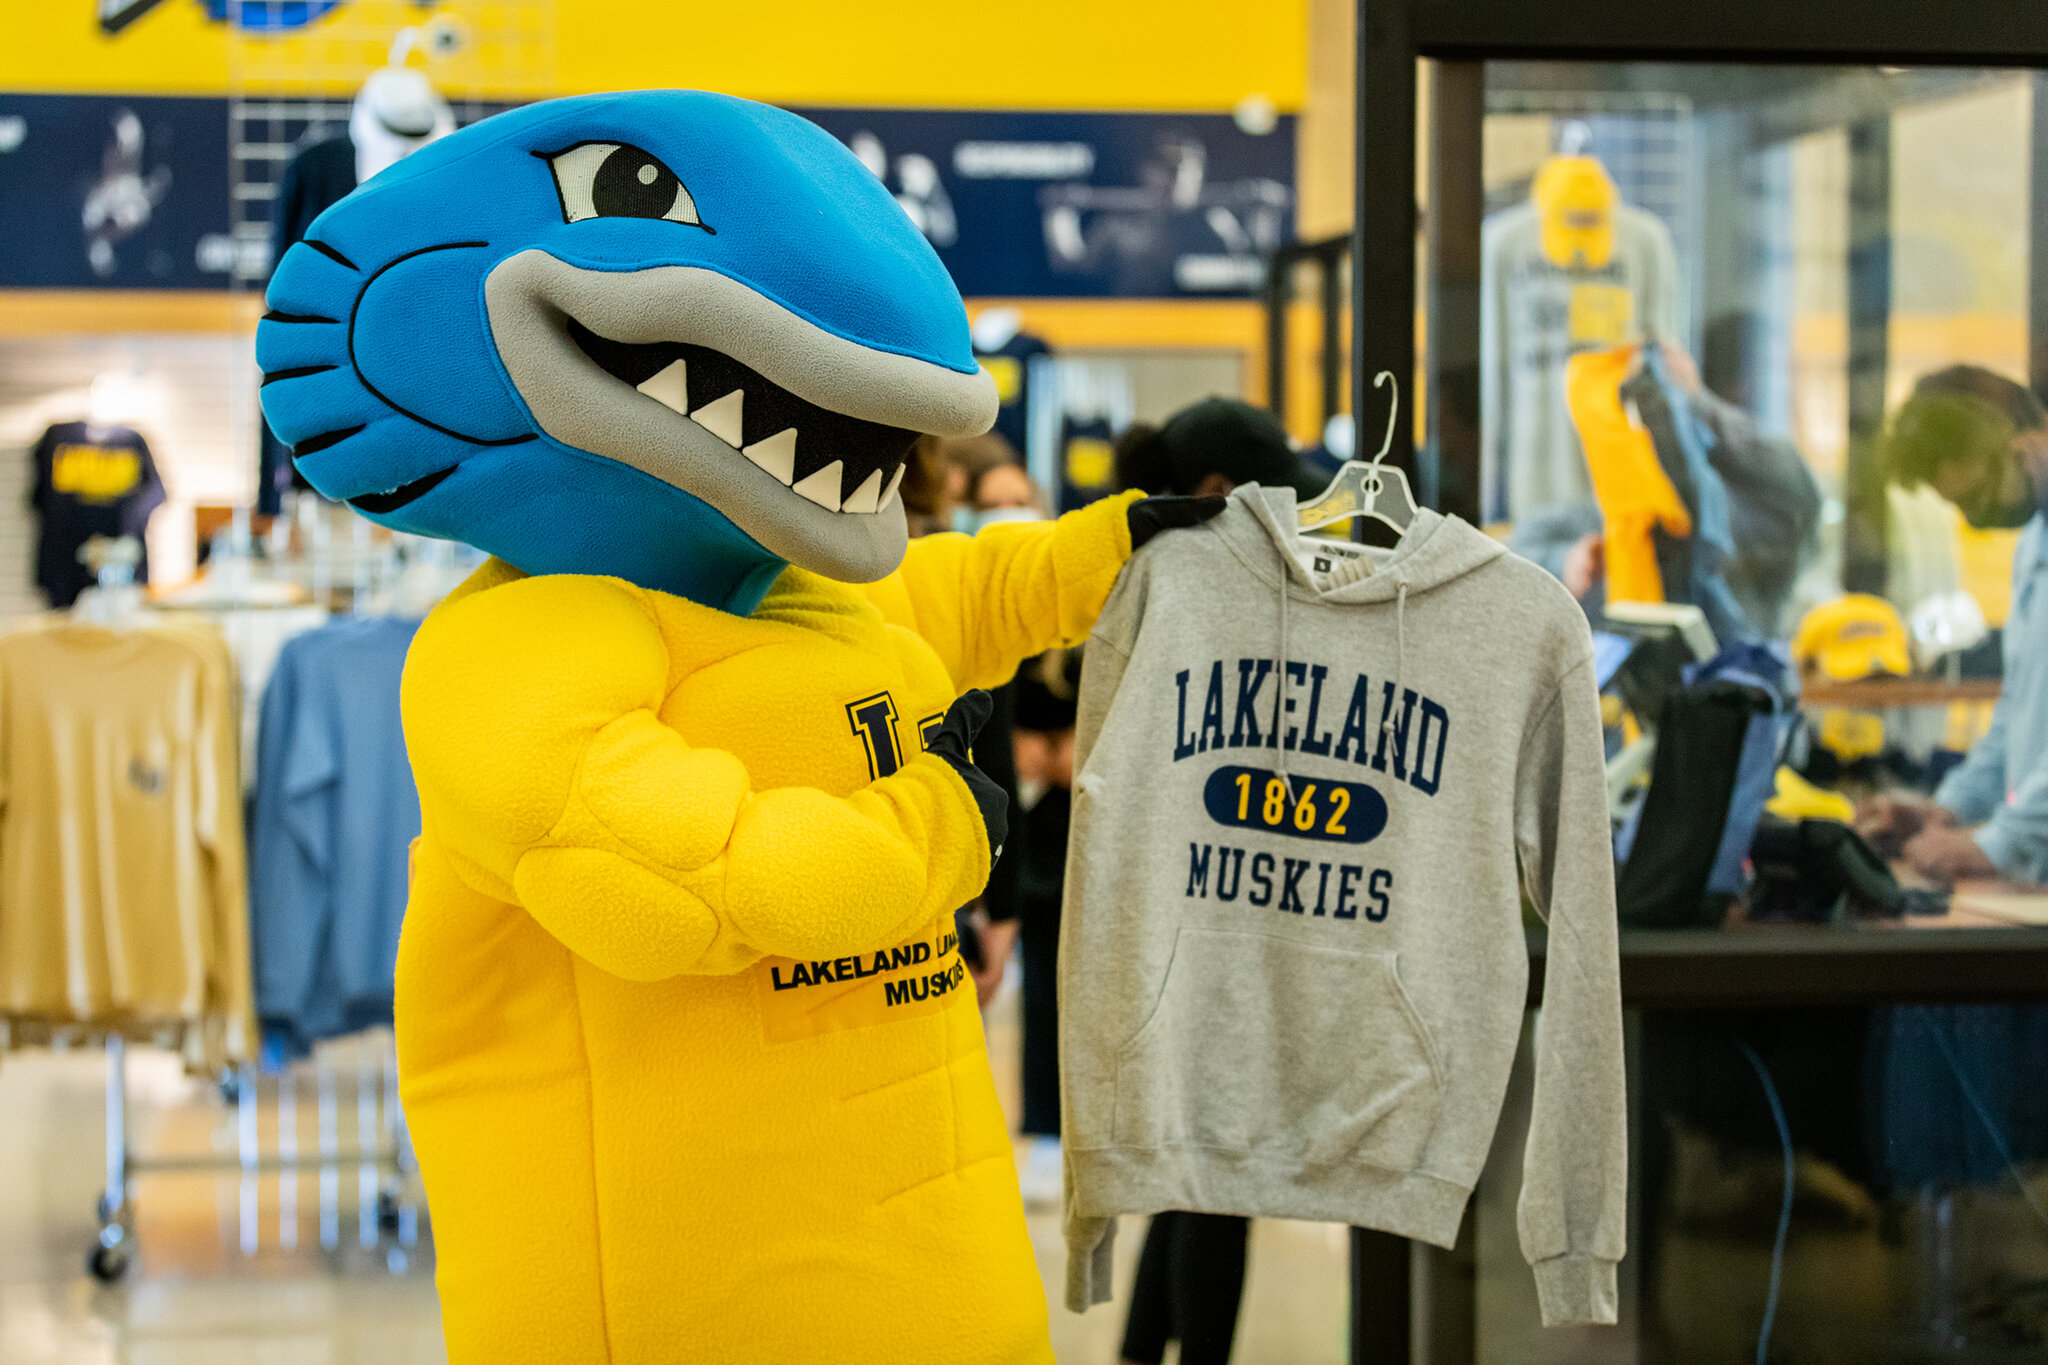 Musko with Lakeland apparel at Musko’s Campus Shop